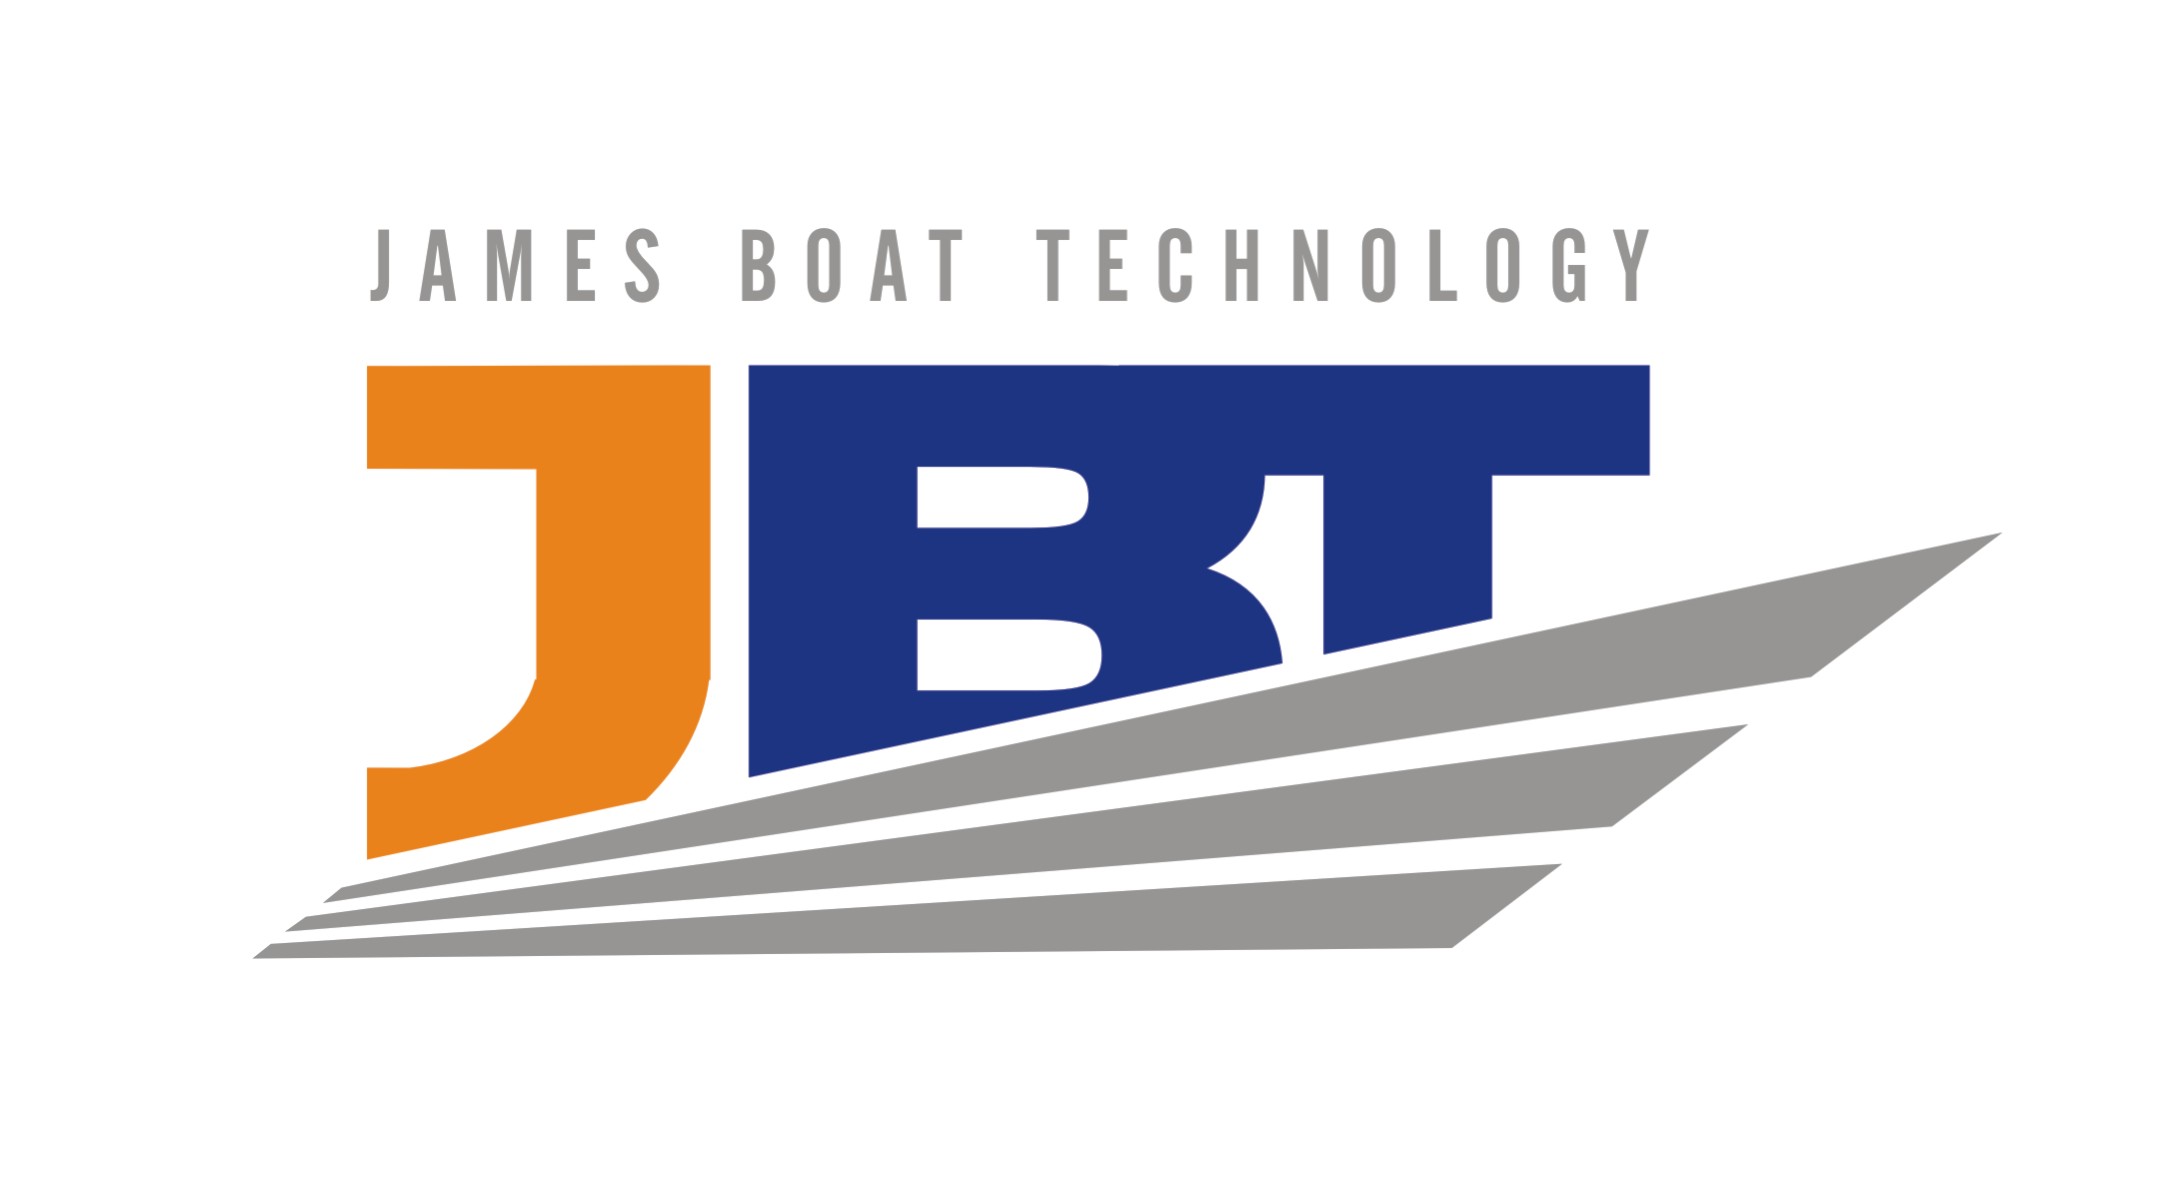 James Boat